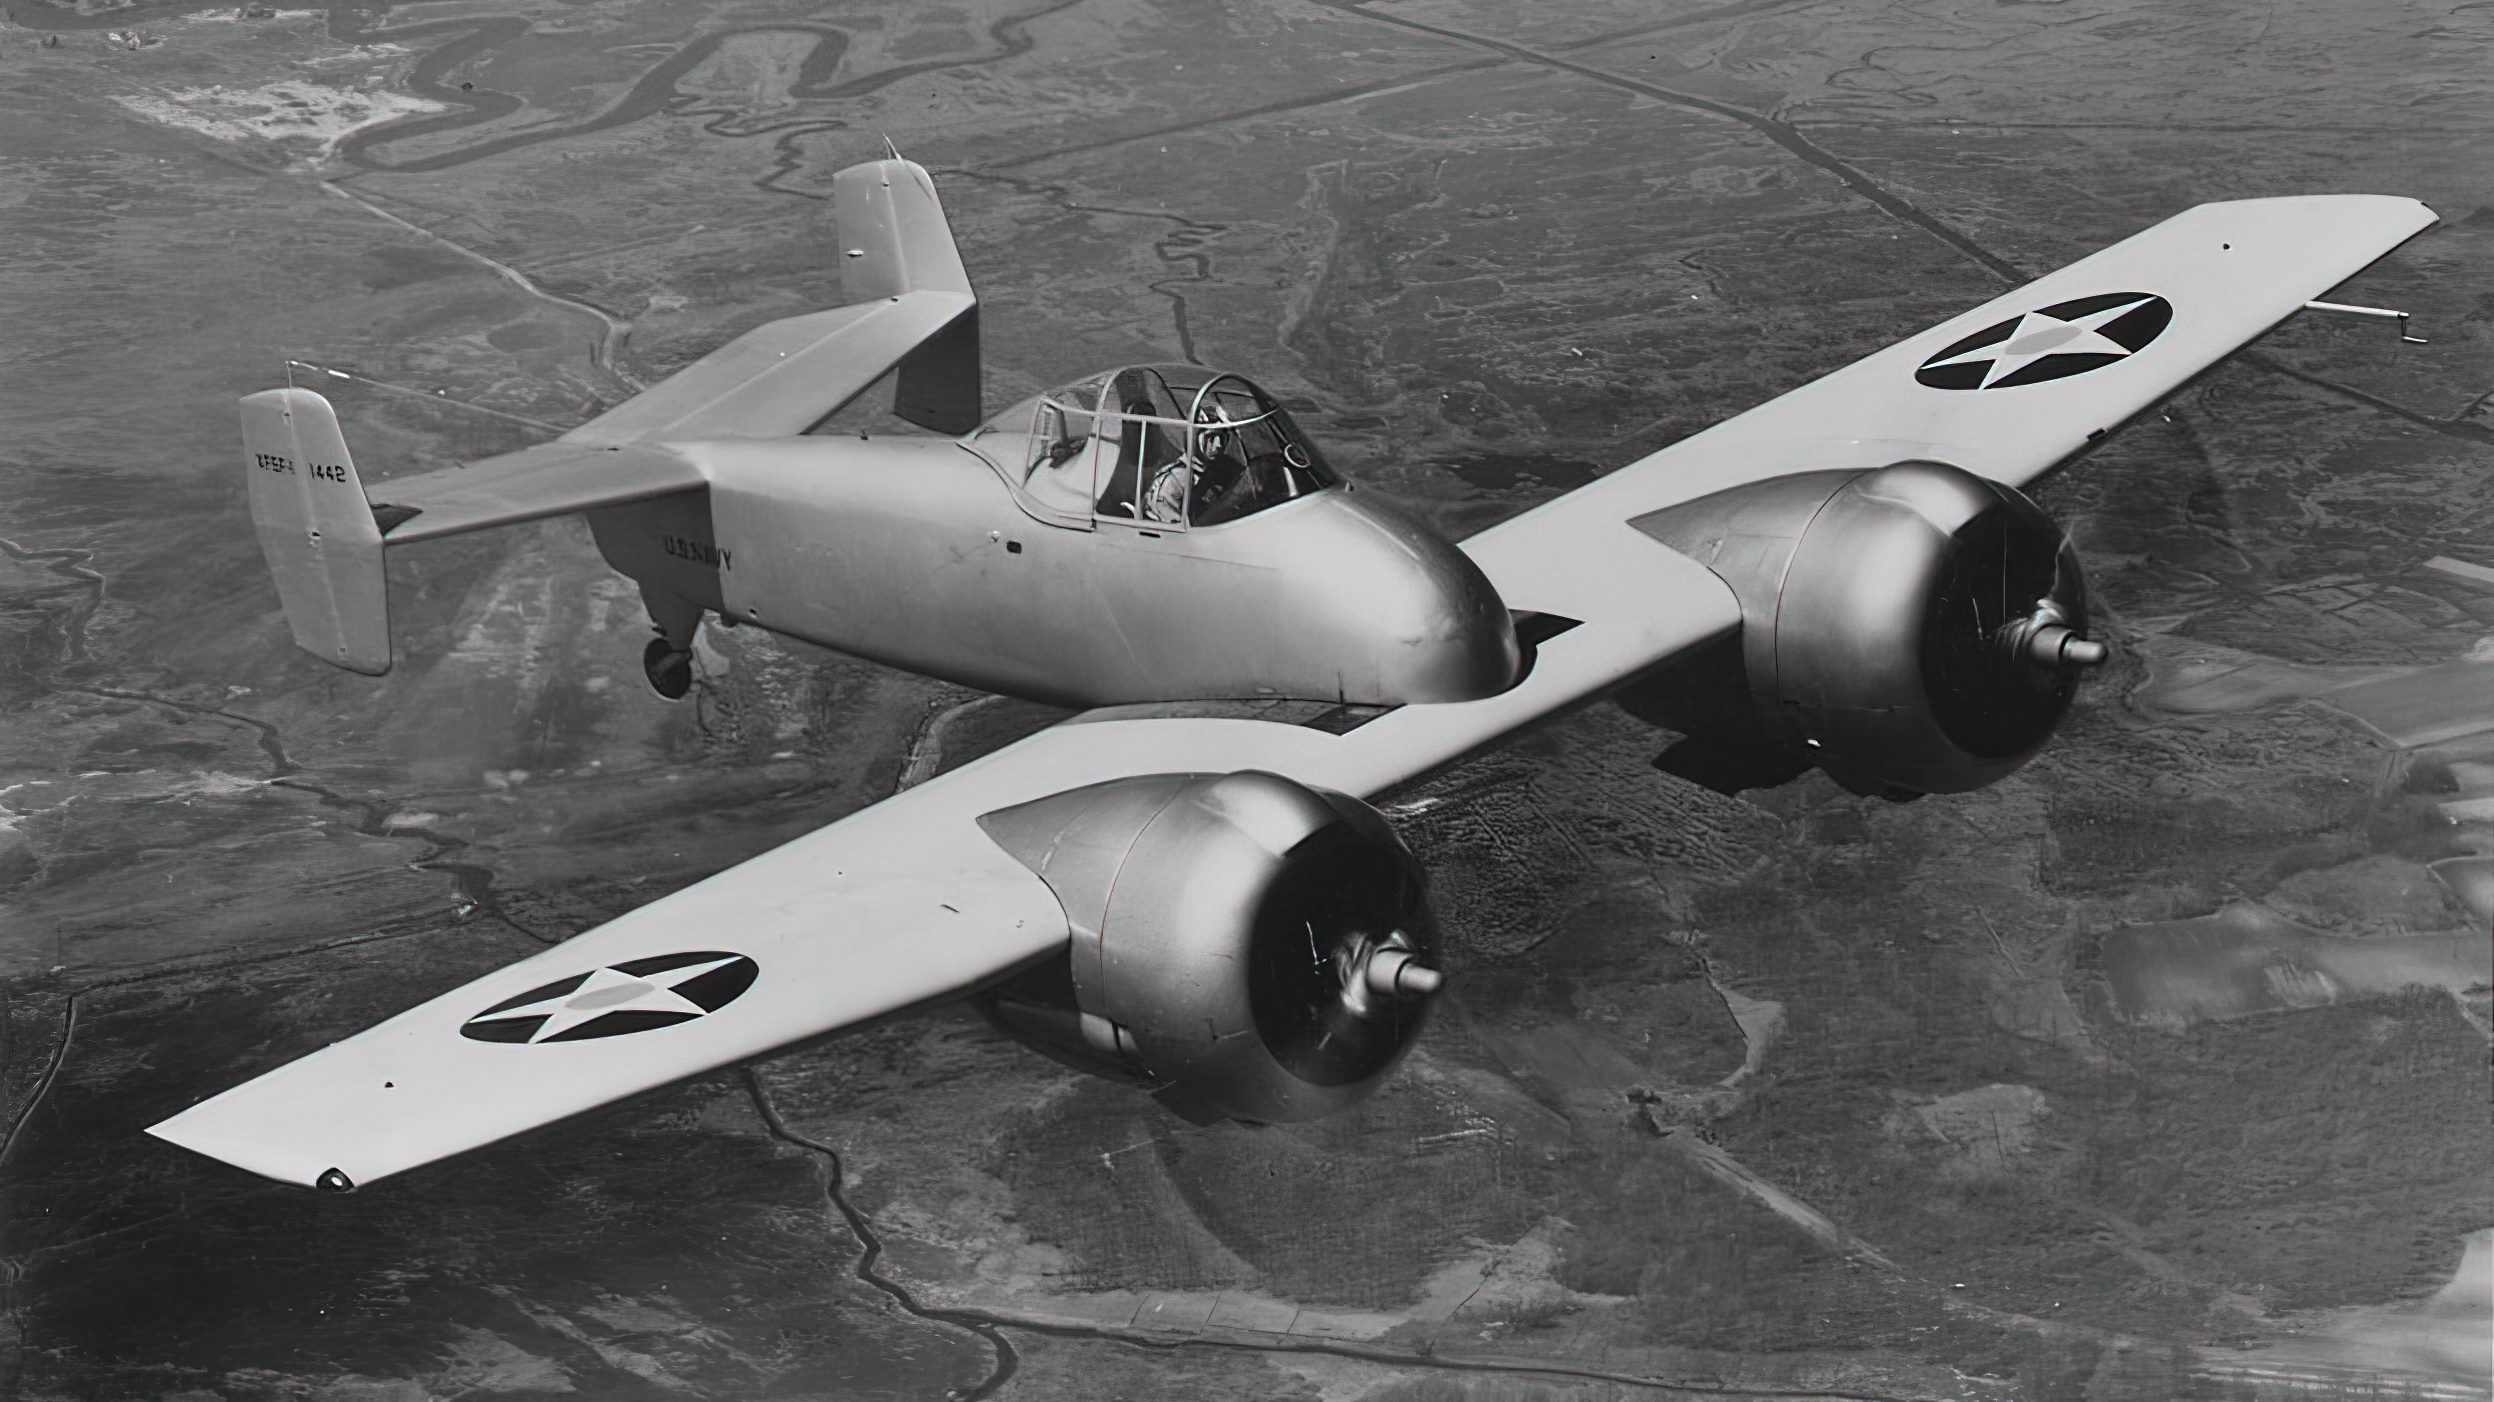 Grumman F5F ‘Skyrocket’ Prototype